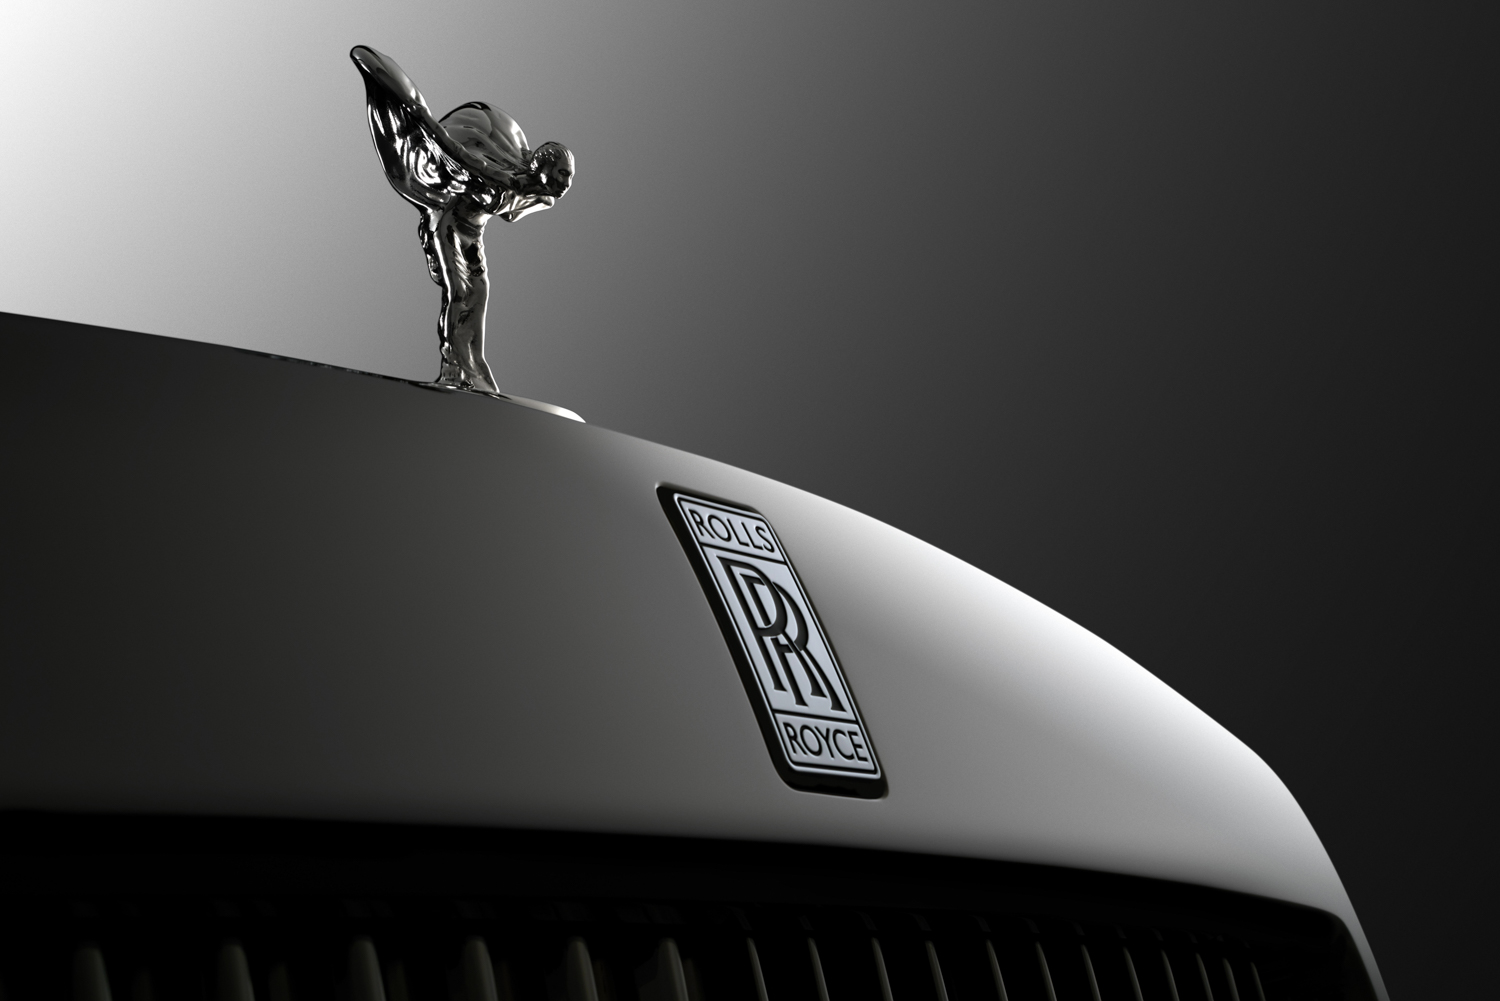 2018 Rolls-Royce Phantom